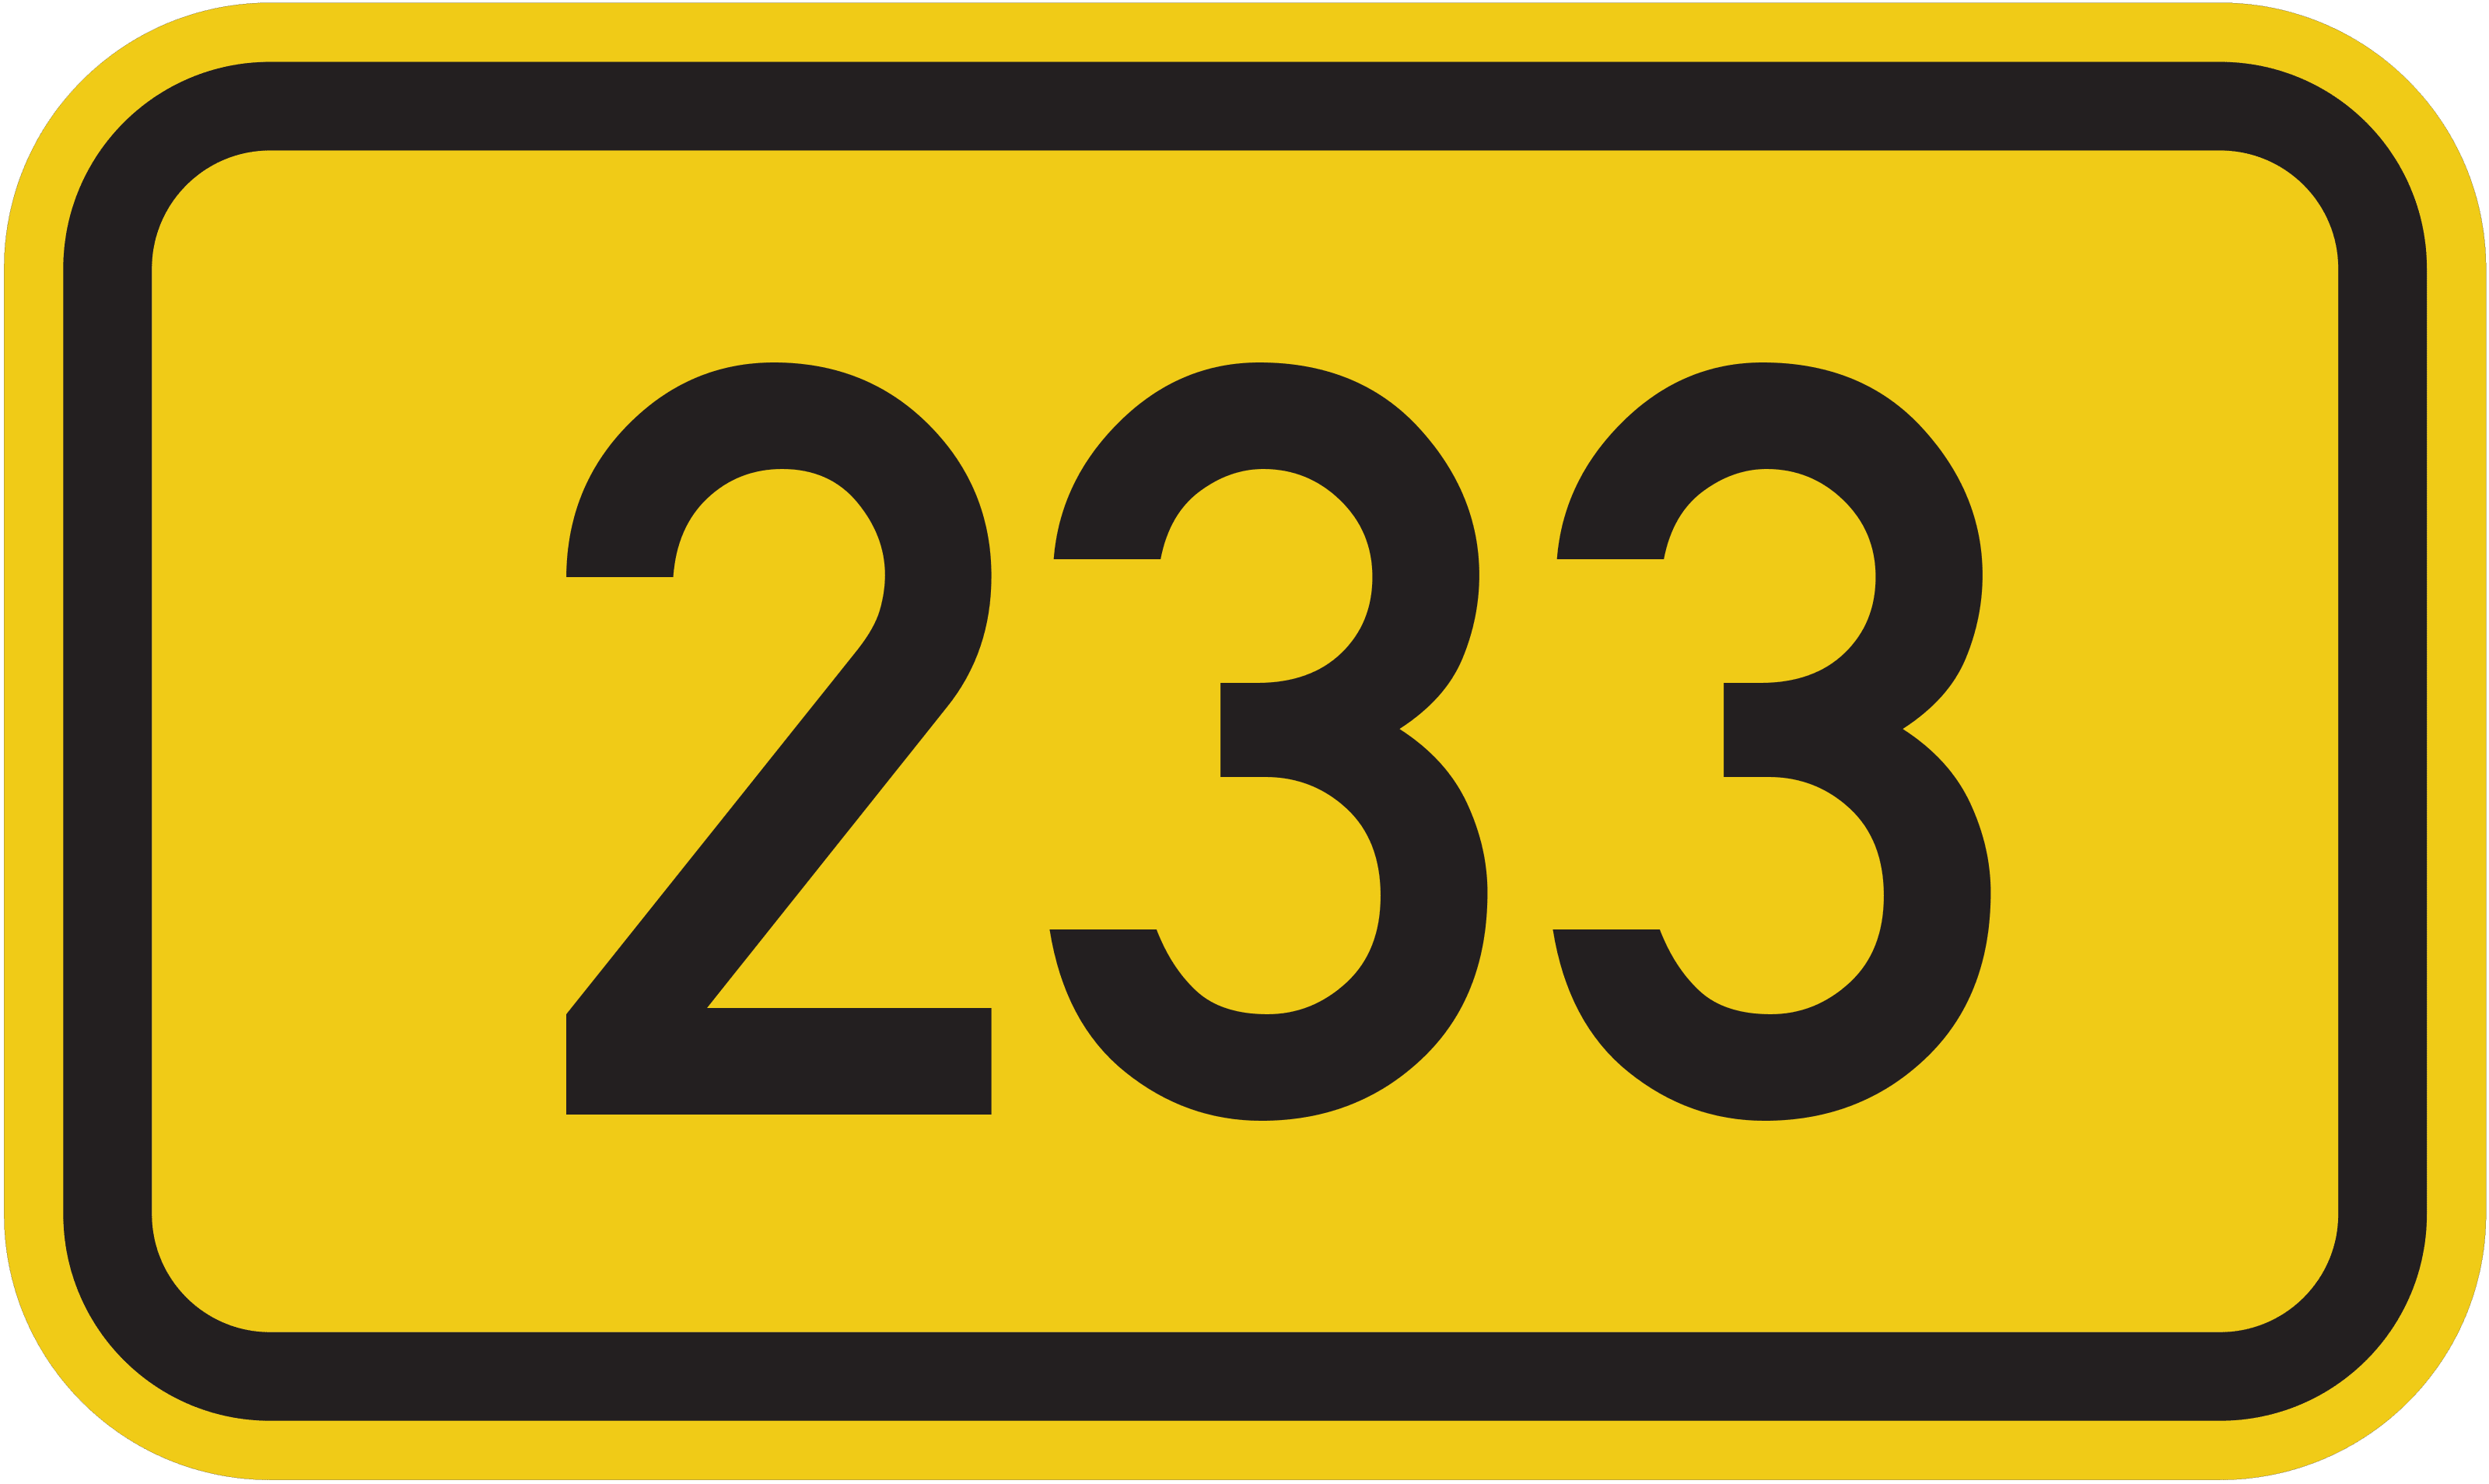 Straßenschild Bundesstraße 233